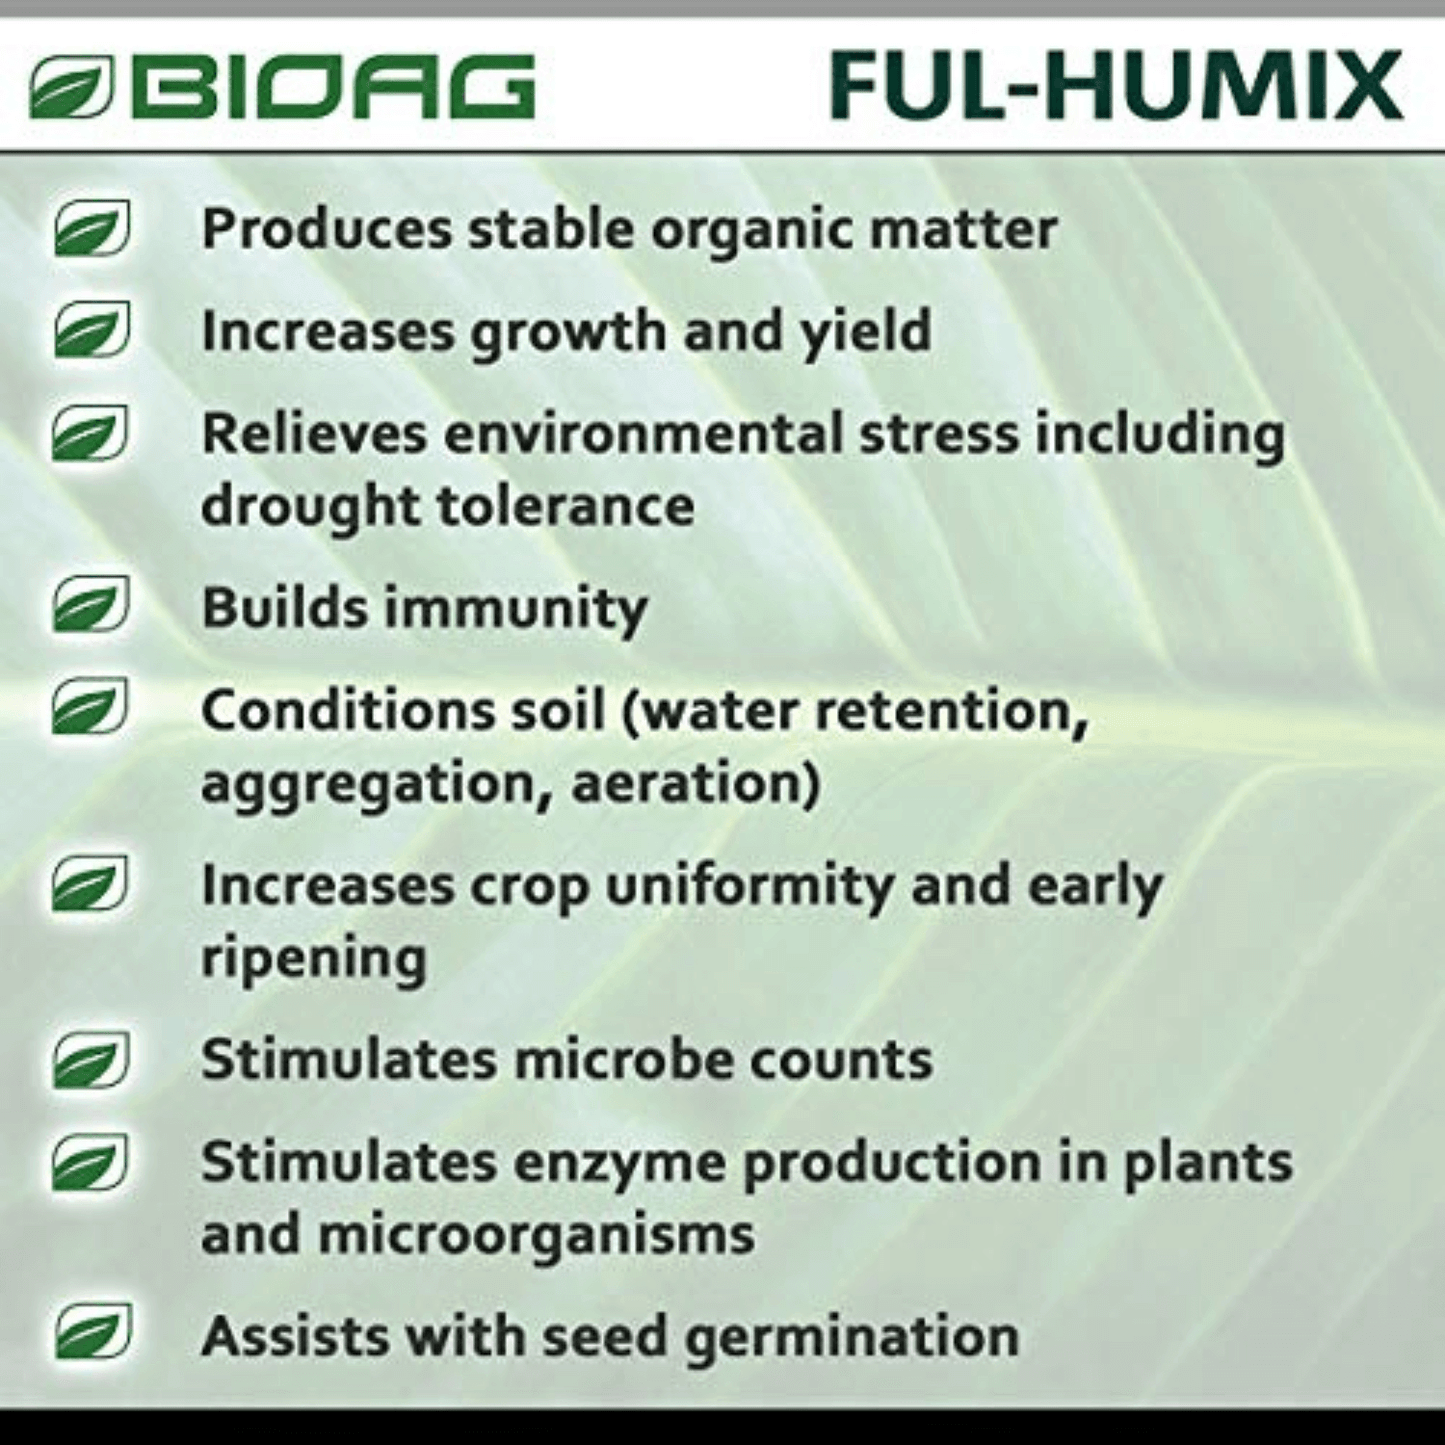 BioAg Ful-Humix Organic Humic Acid, 5 lb Pouch BA72050 Planting & Watering 810051910353